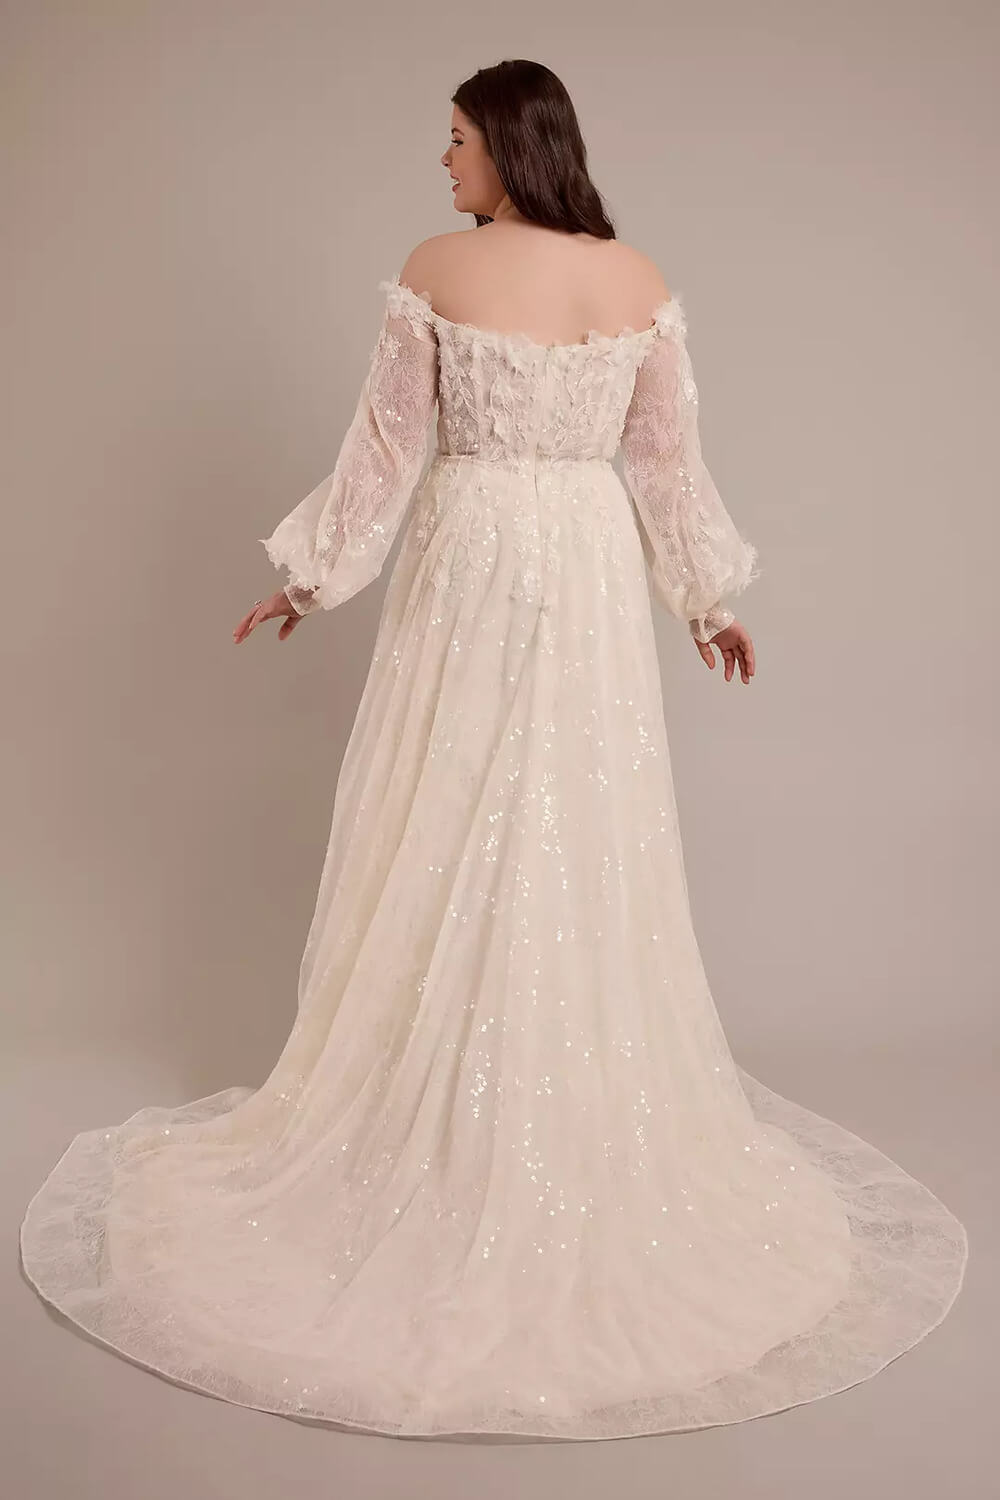 Plus Size Wedding Dresses Online Long Sleeve Off the Shoulder Wedding Dress Melissa Sweet